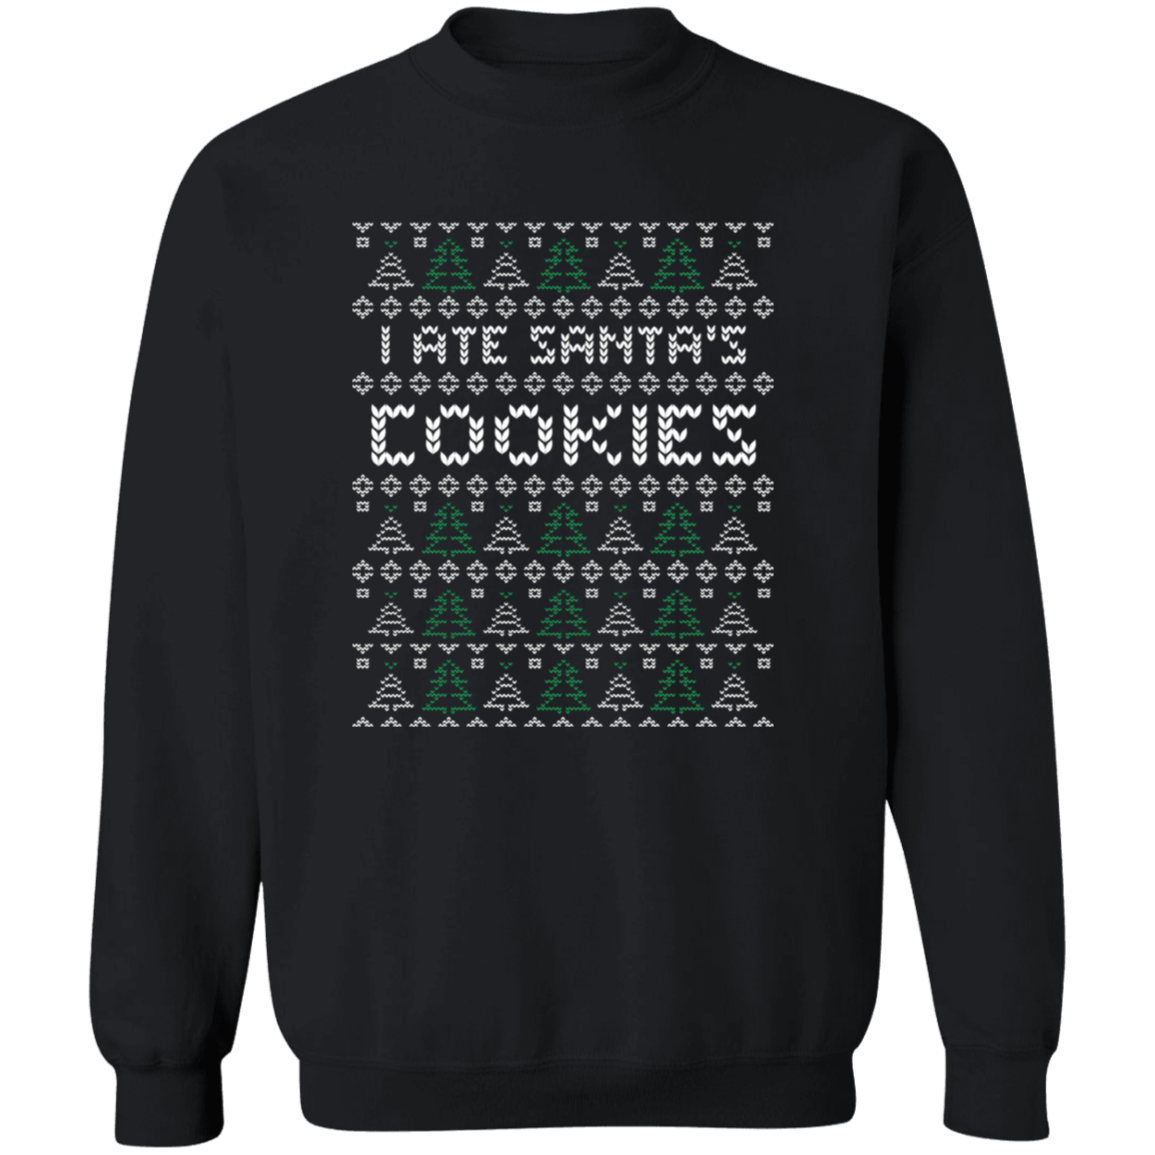 I Ate Santa's Cookies Sweatshirt